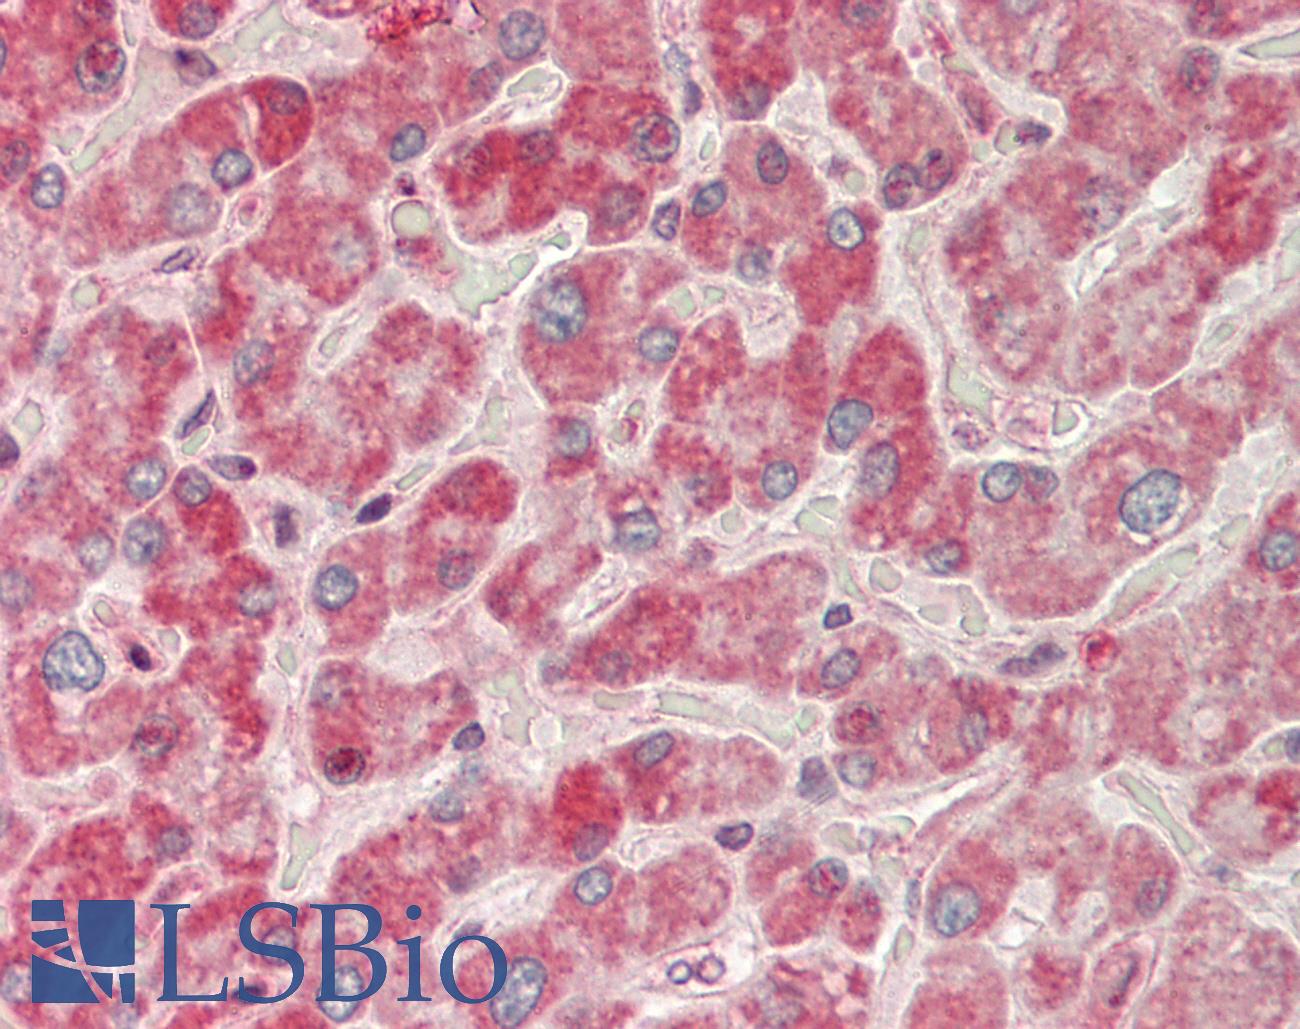 c-CBL Antibody - Human Liver: Formalin-Fixed, Paraffin-Embedded (FFPE)